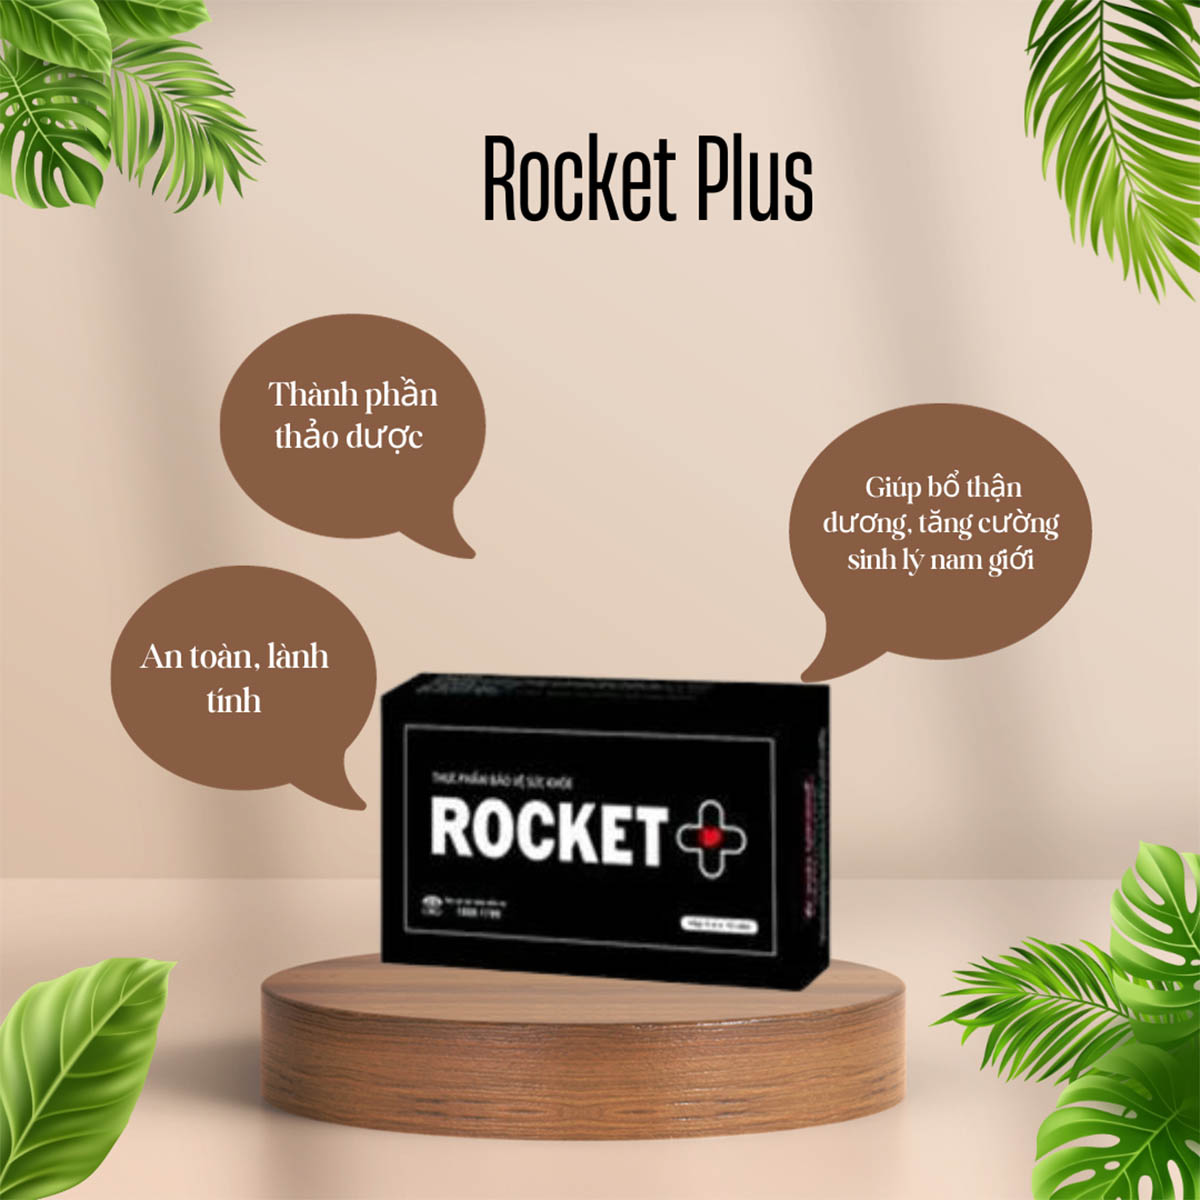 Rocket Plus